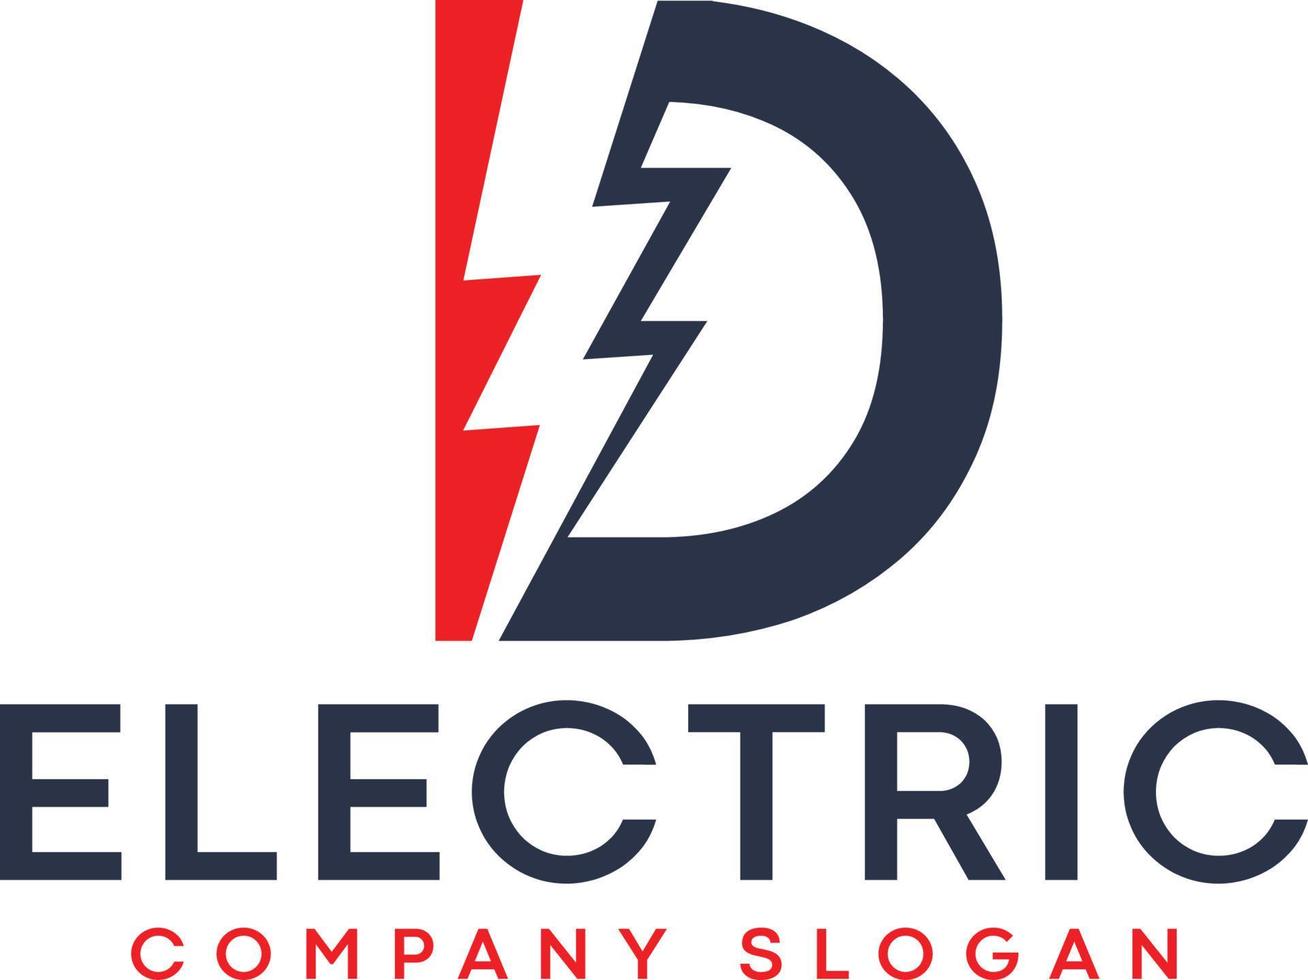 D Electric Letter Logo Design With Lighting Thunder Bolt logo vector